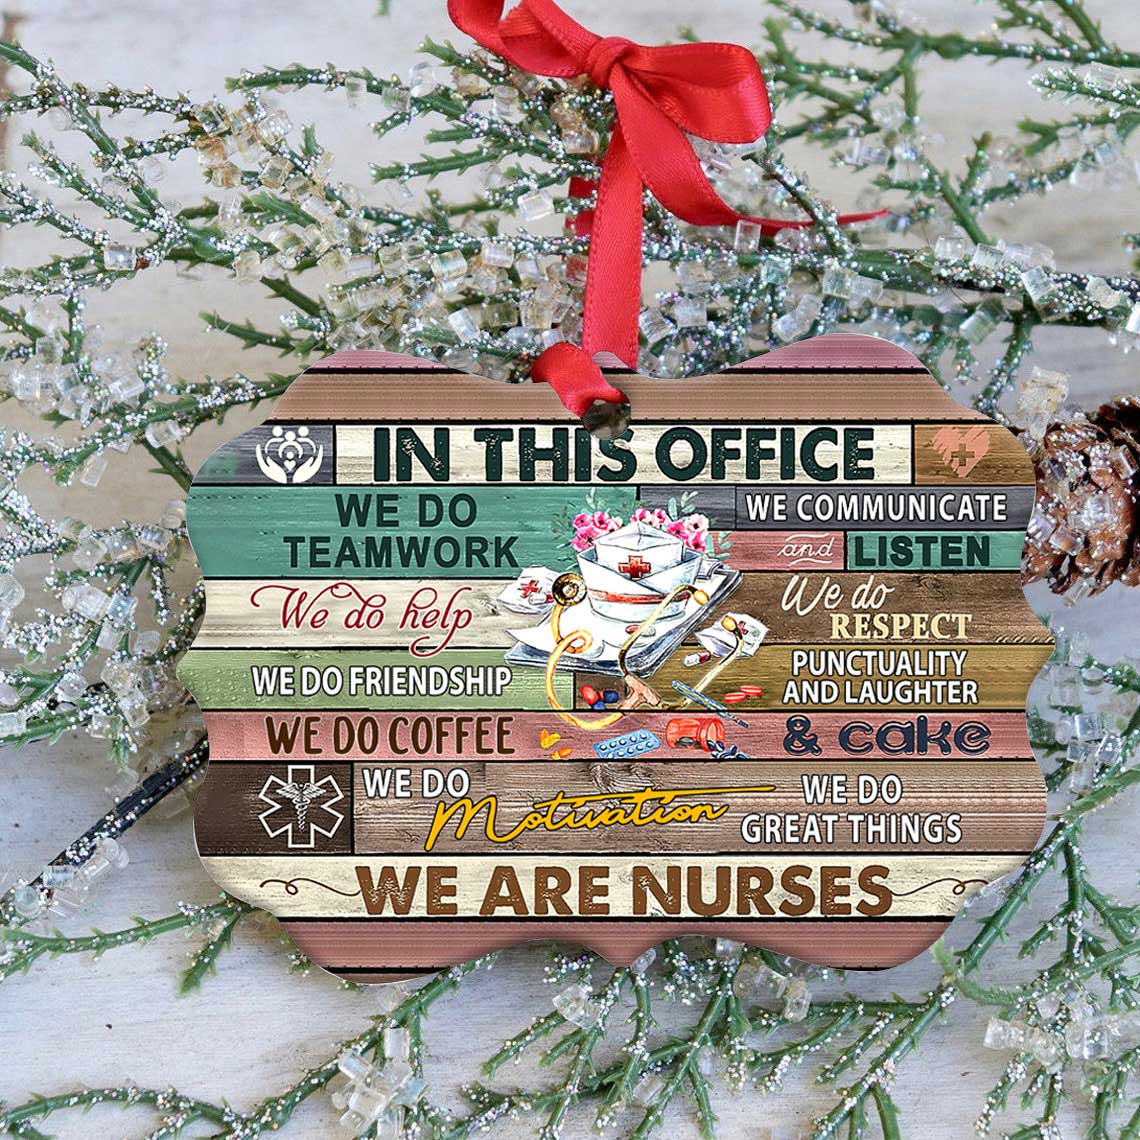 Nurse Rules In Office - Horizontal Ornament - Owls Matrix LTD